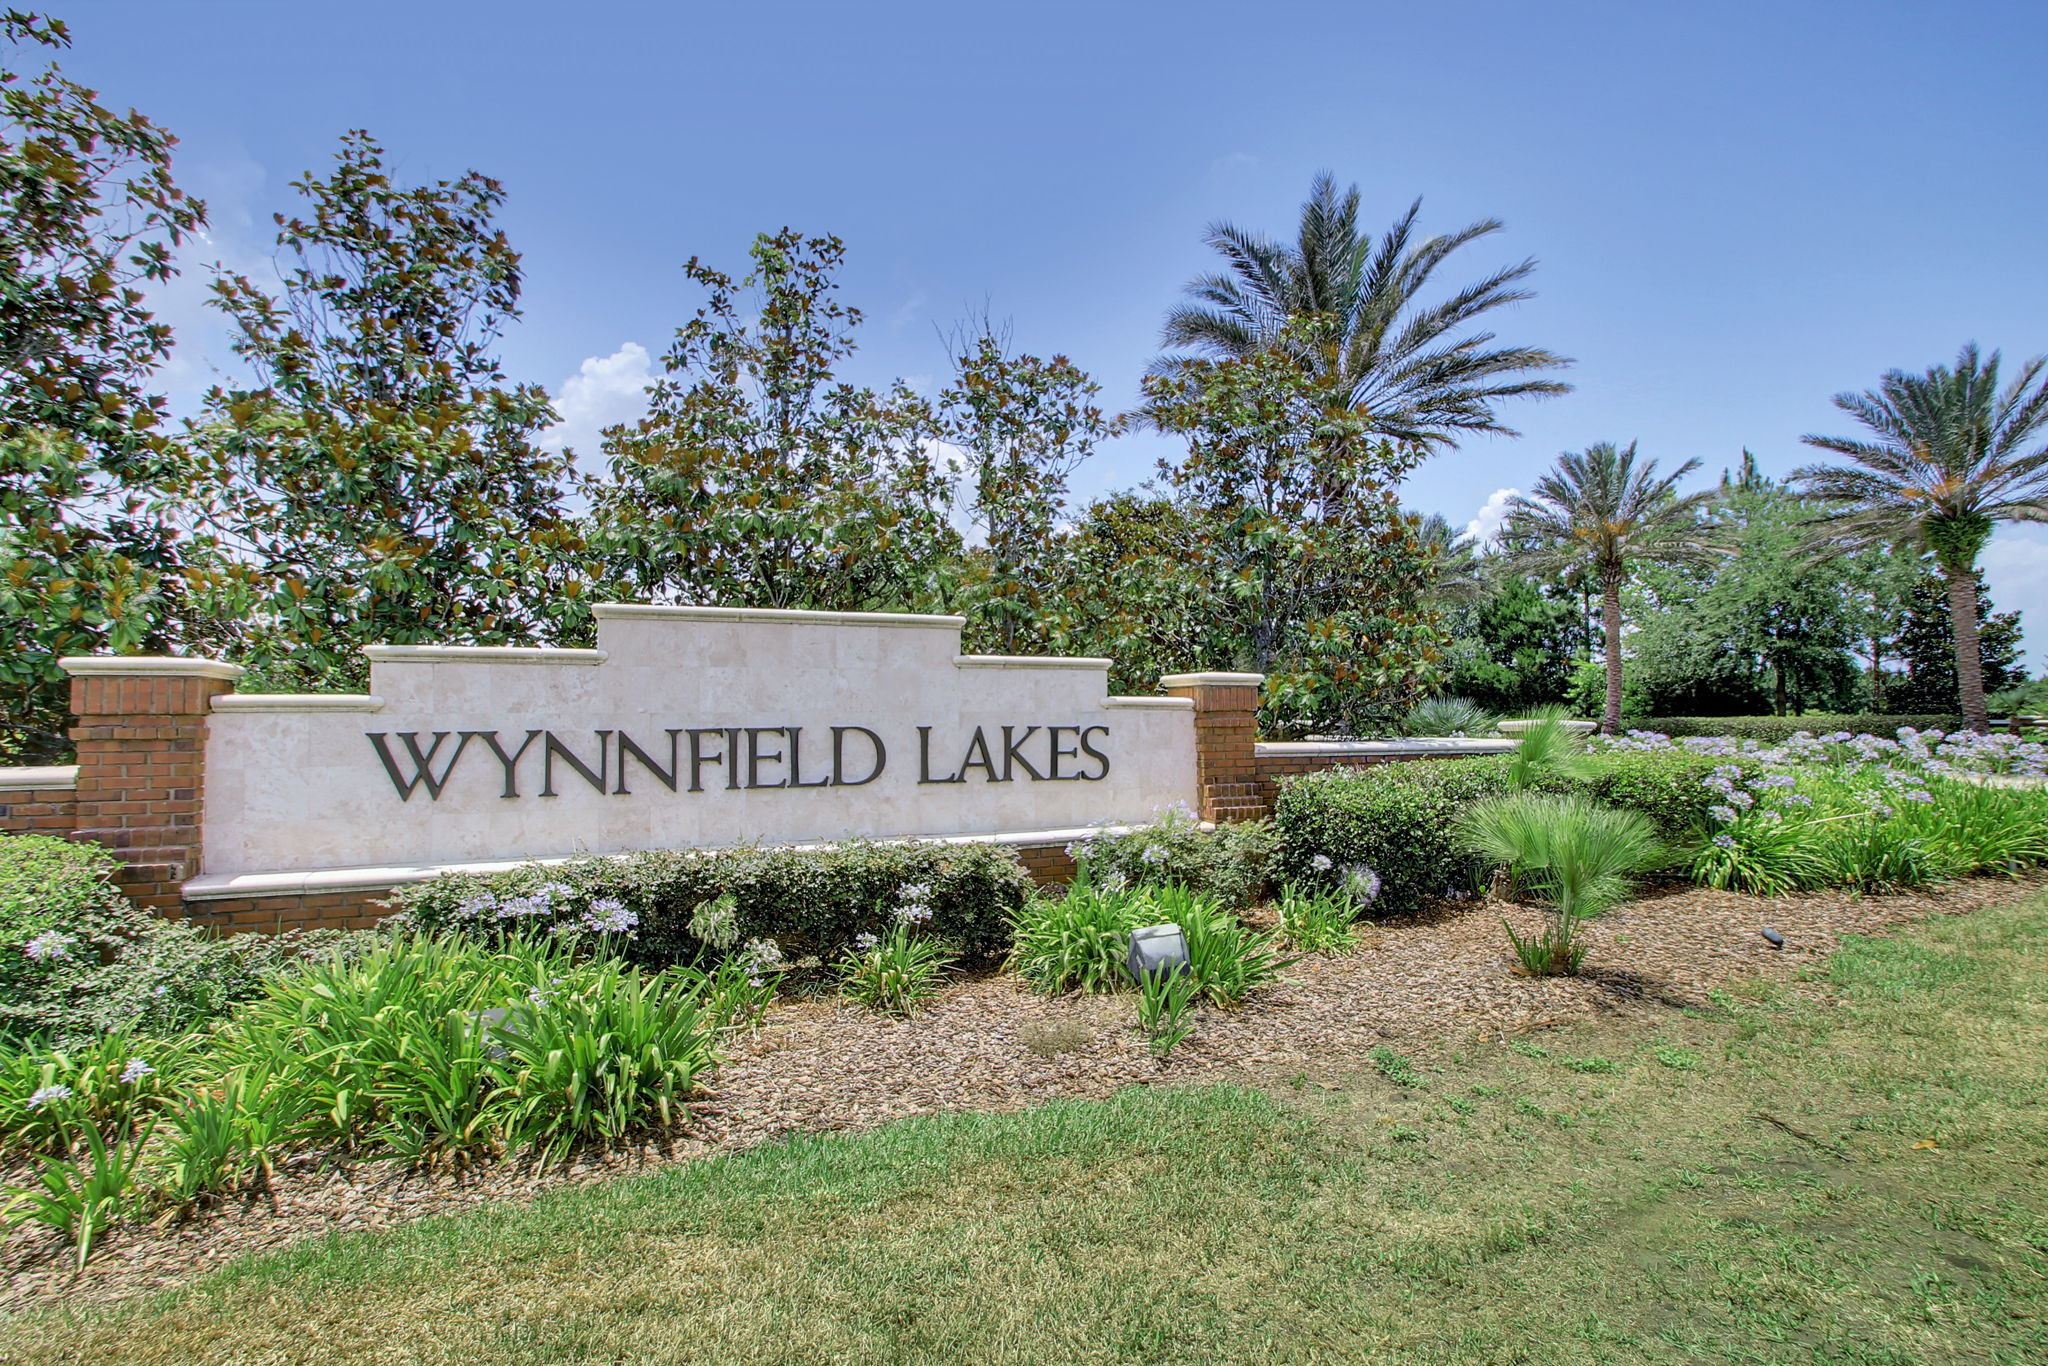 Wynnfield Lakes